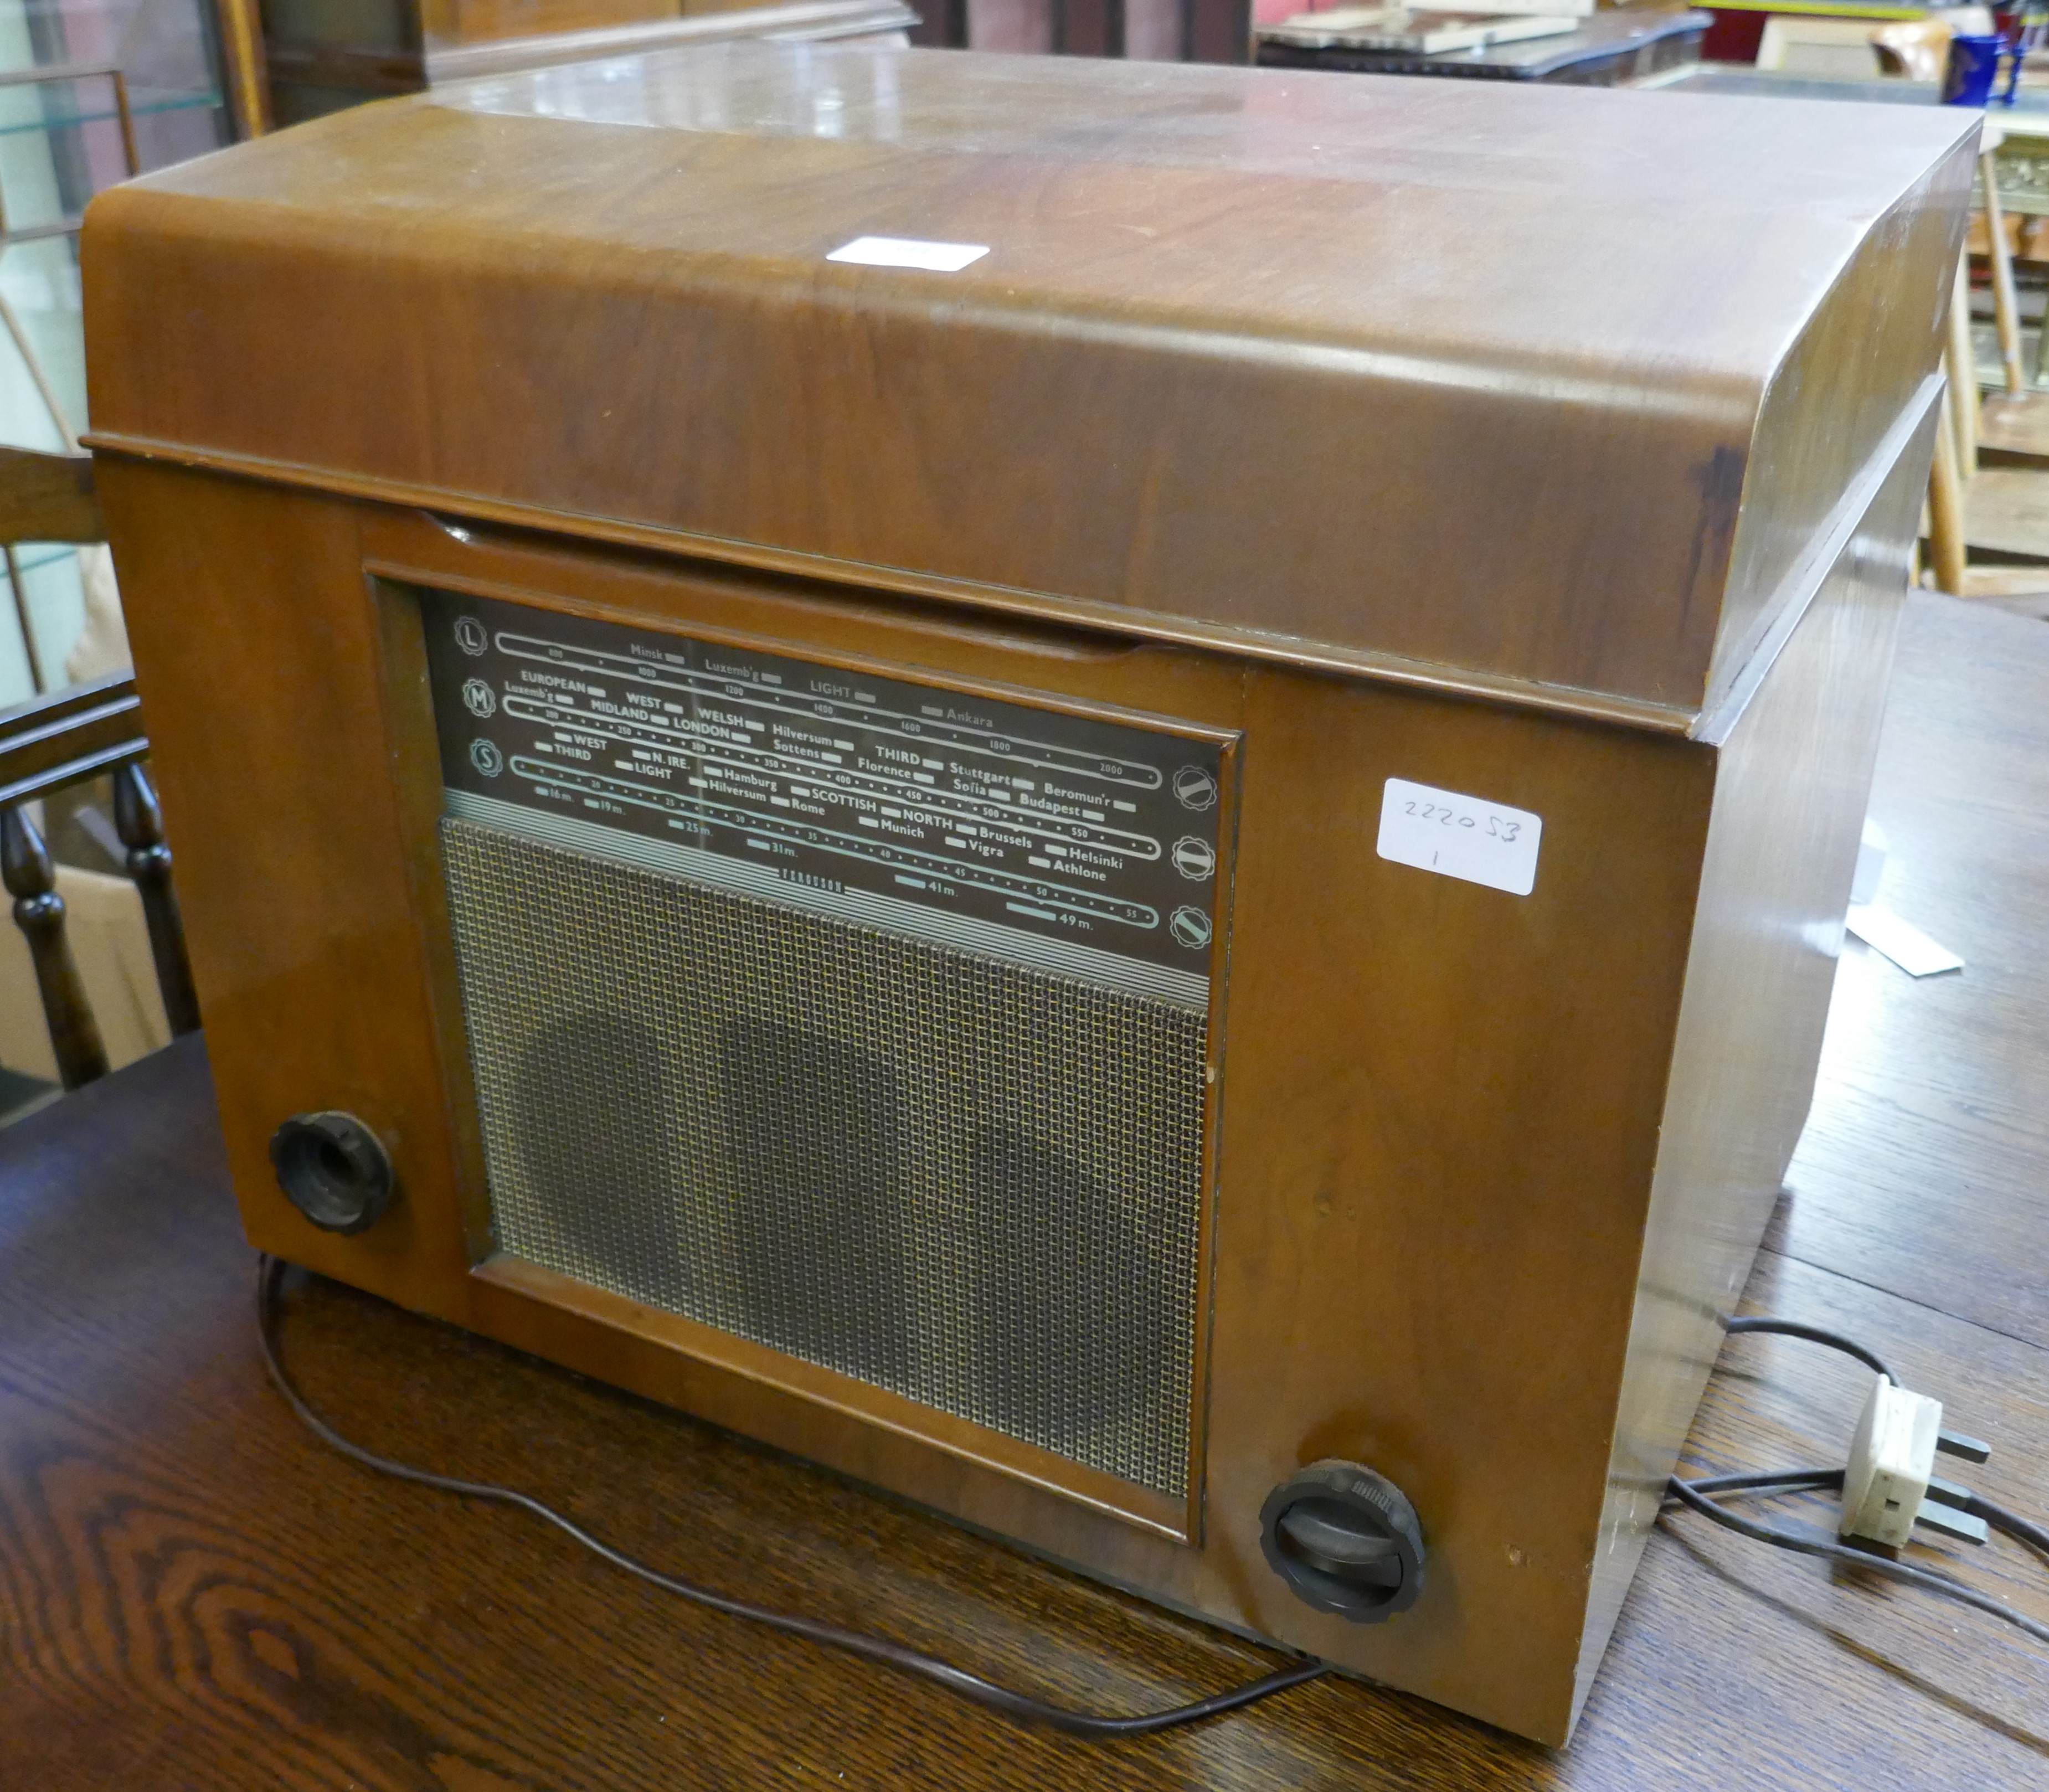 A walnut cased Ferguson radio and record player